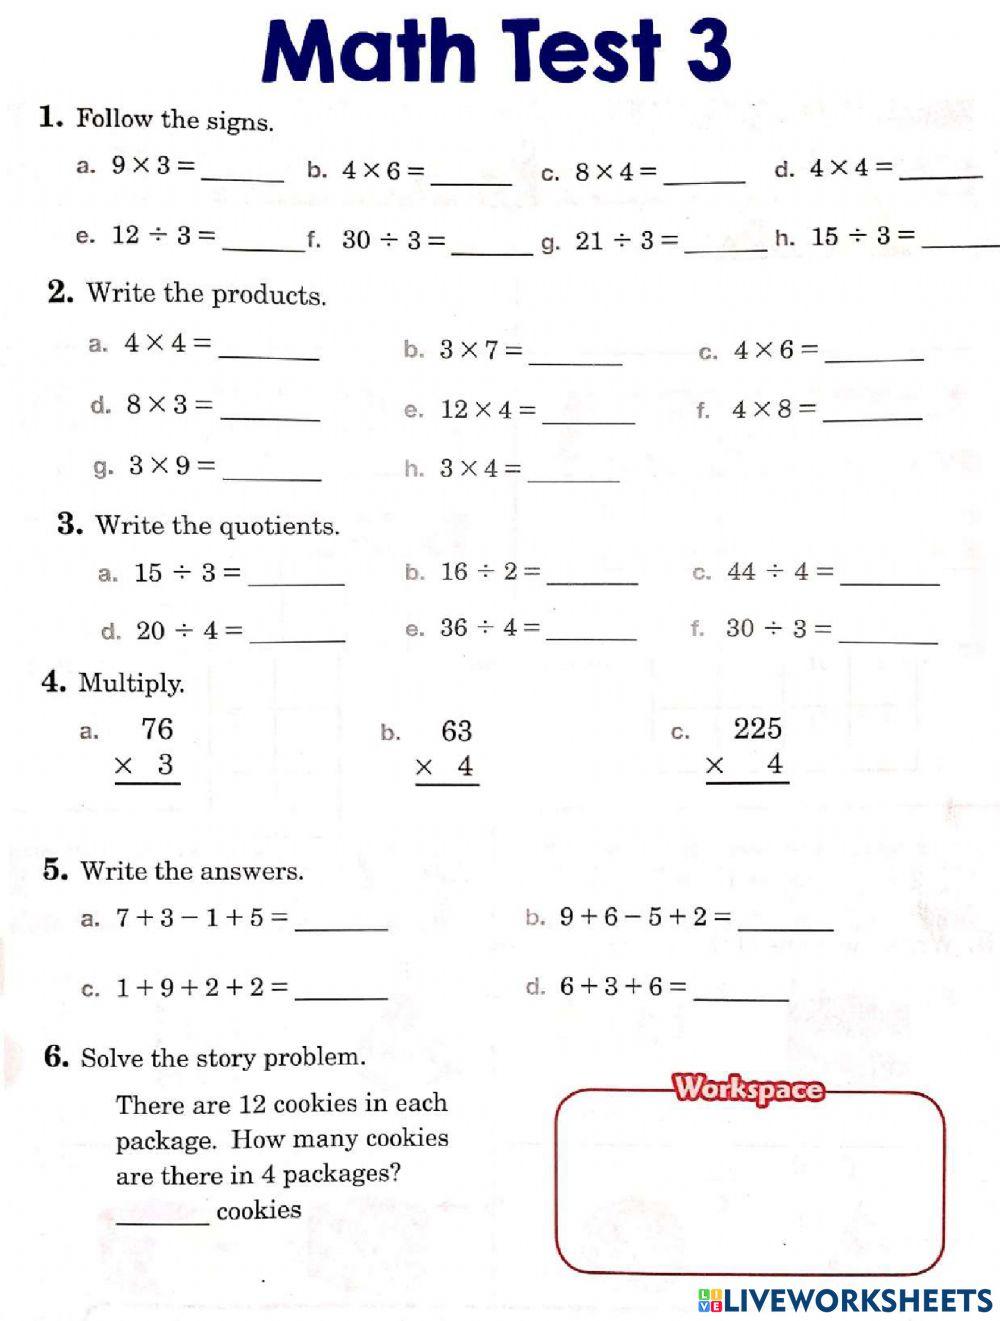 Math Test 3